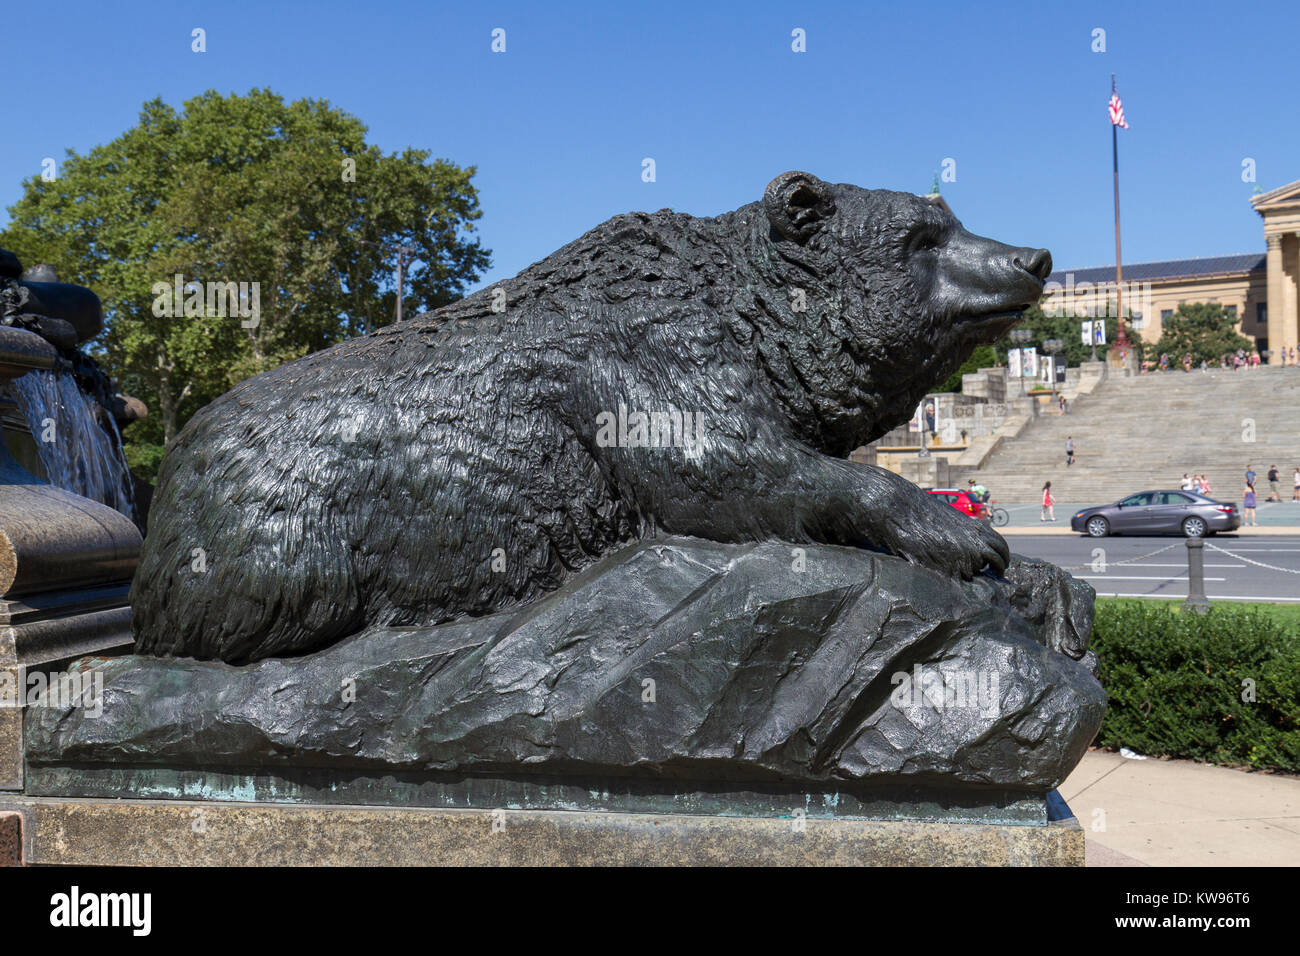 The bear sculpture on the Washington Monument Fountain, Eakins Oval, Philadelphia, Pennsylvania, USA. Stock Photo